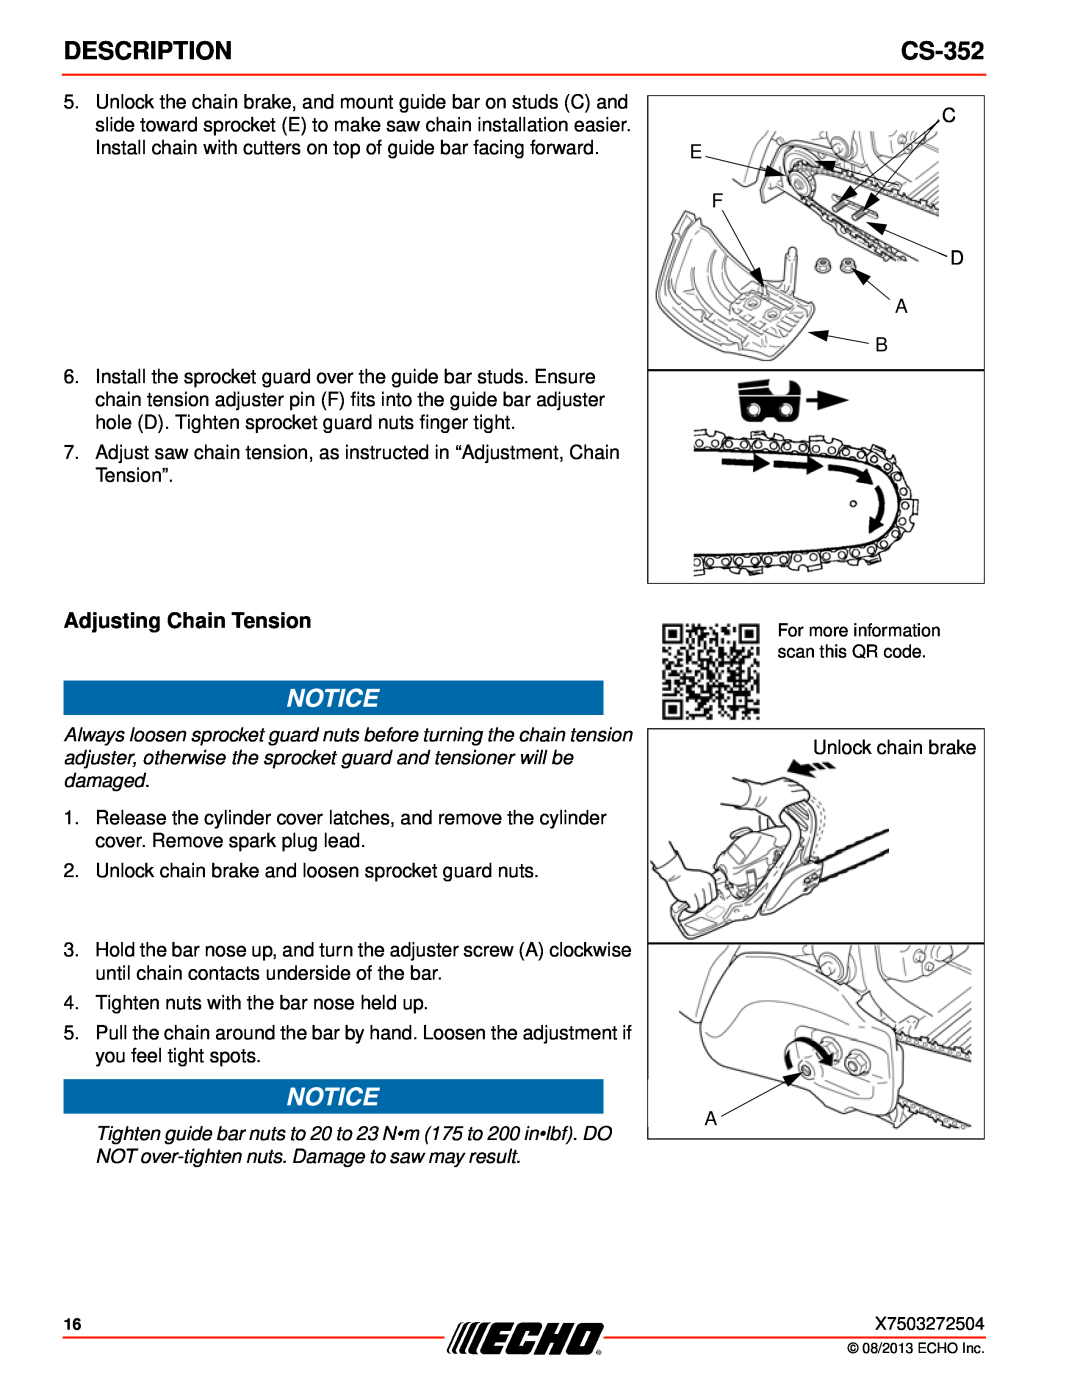 Echo CS-352 instruction manual Adjusting Chain Tension, Description 